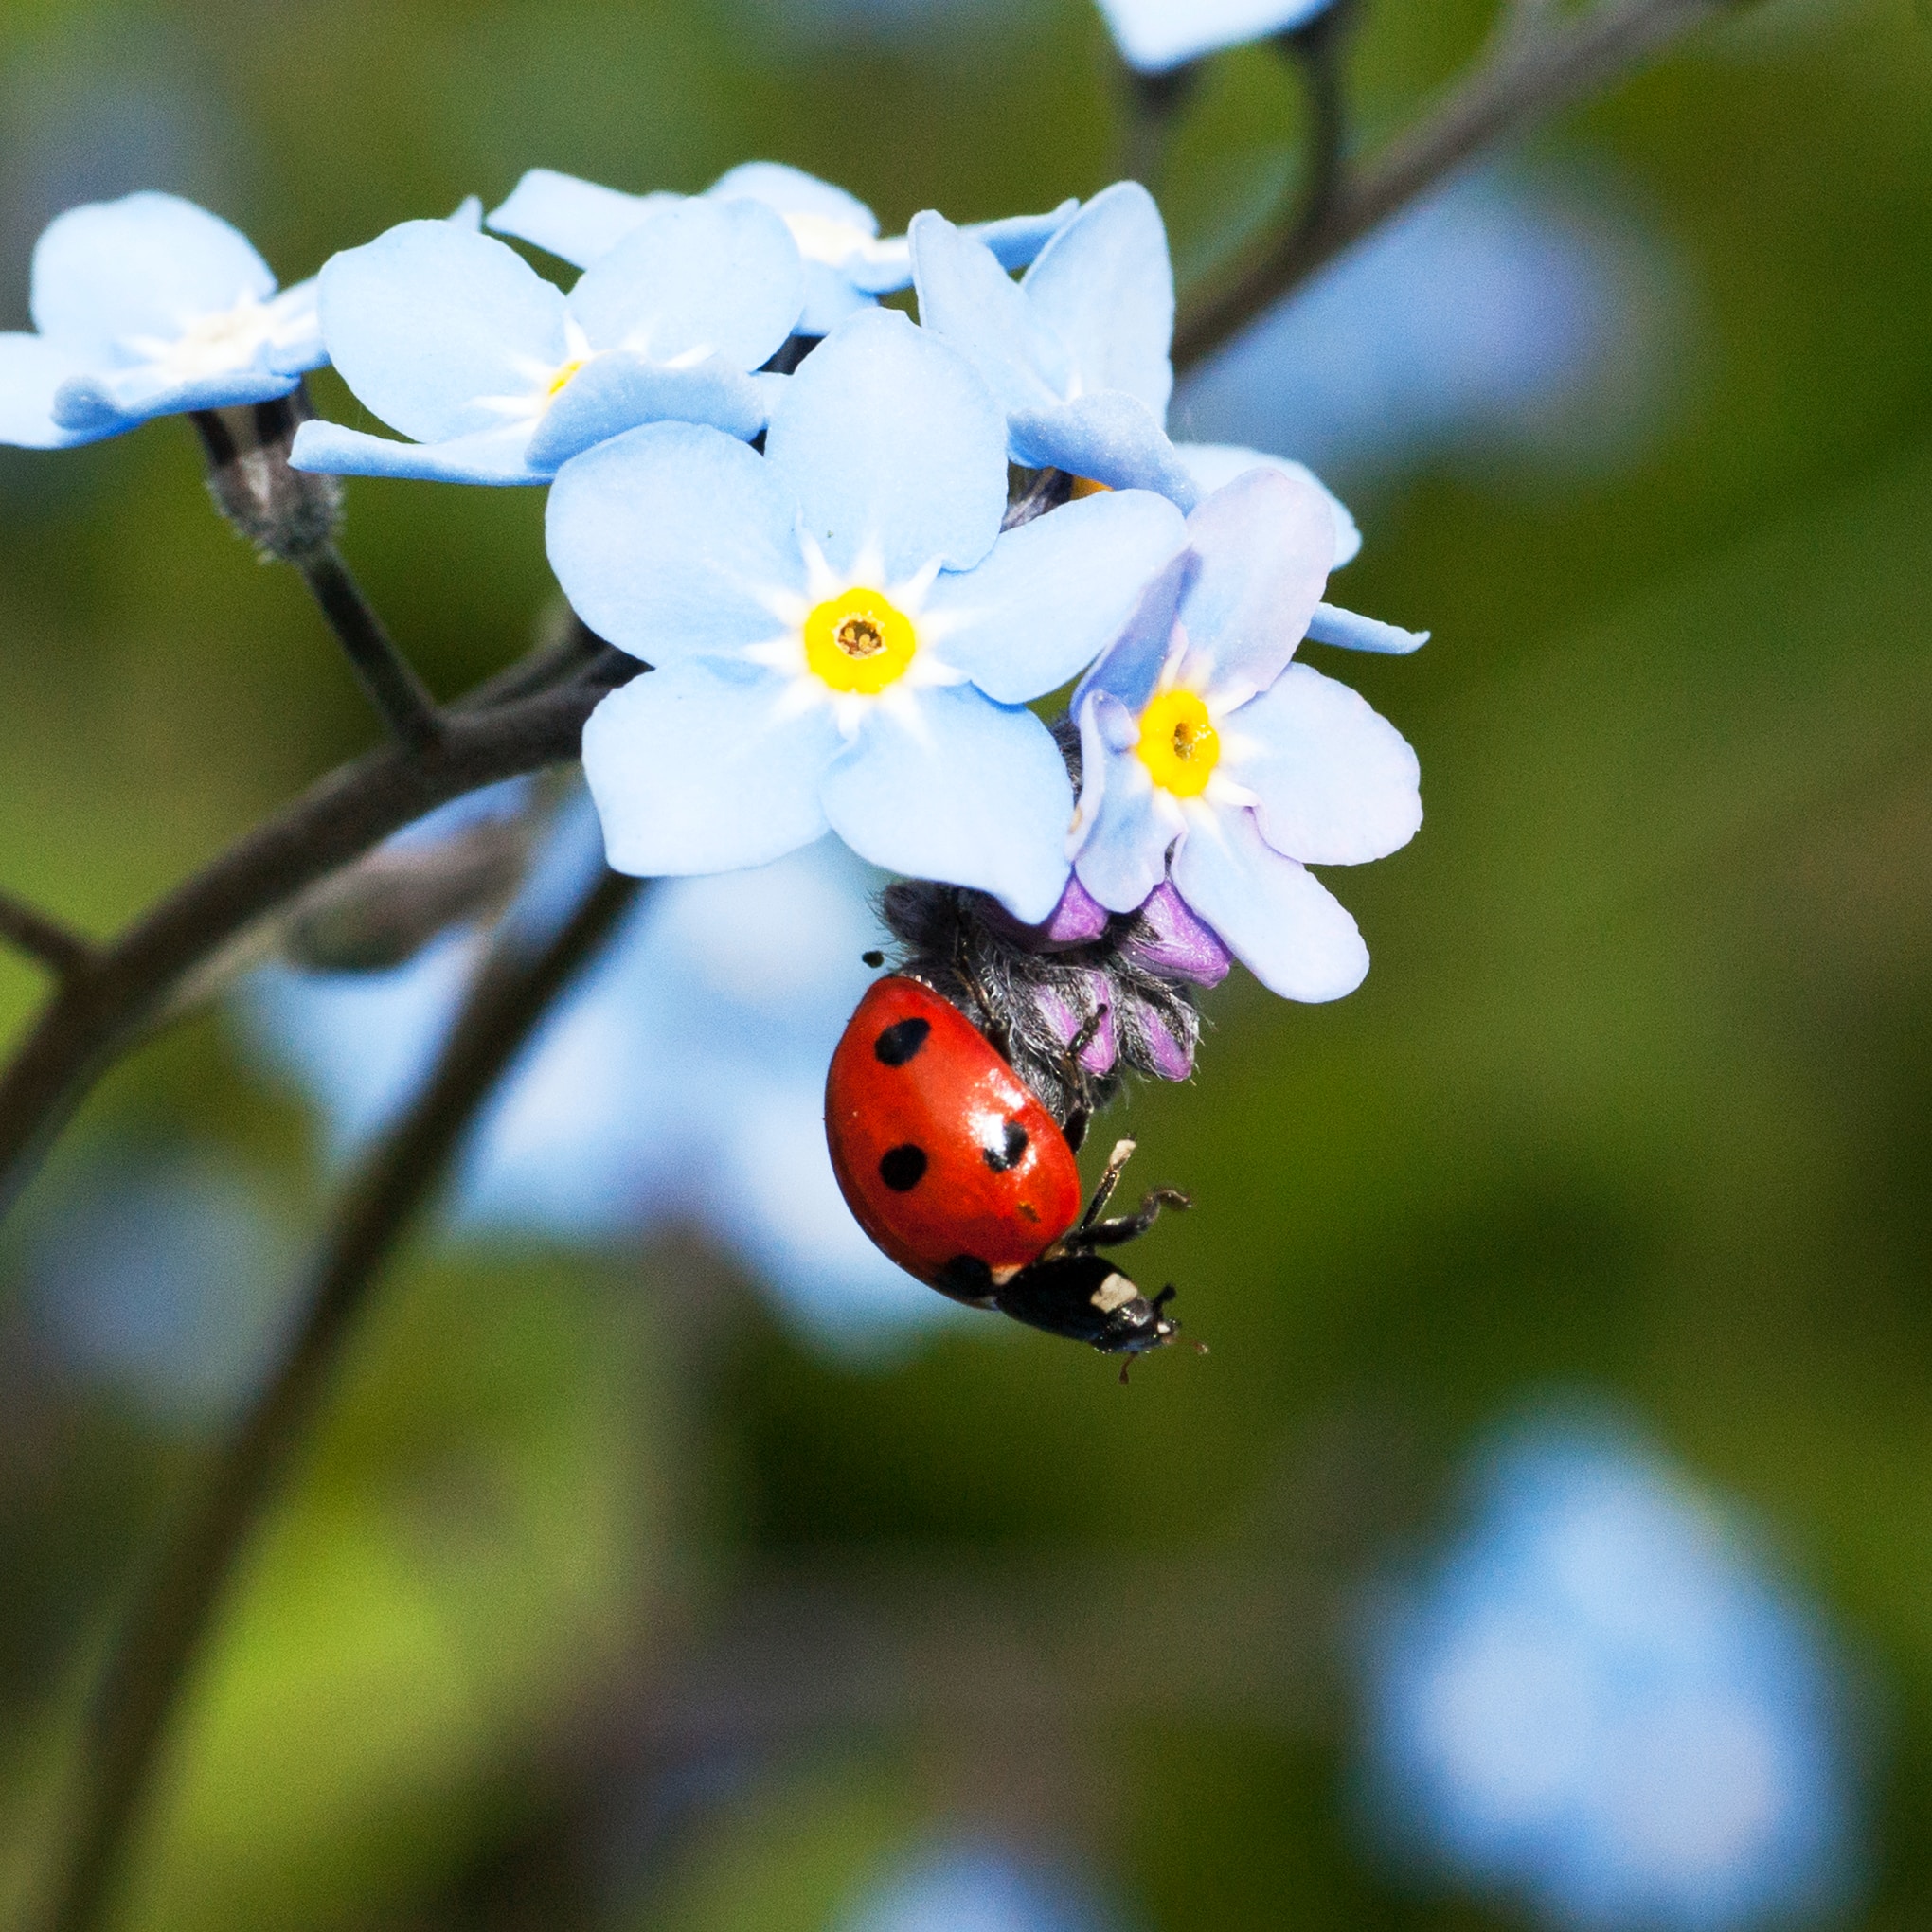 selective focus photograph of ladybug on white petaled flower plant